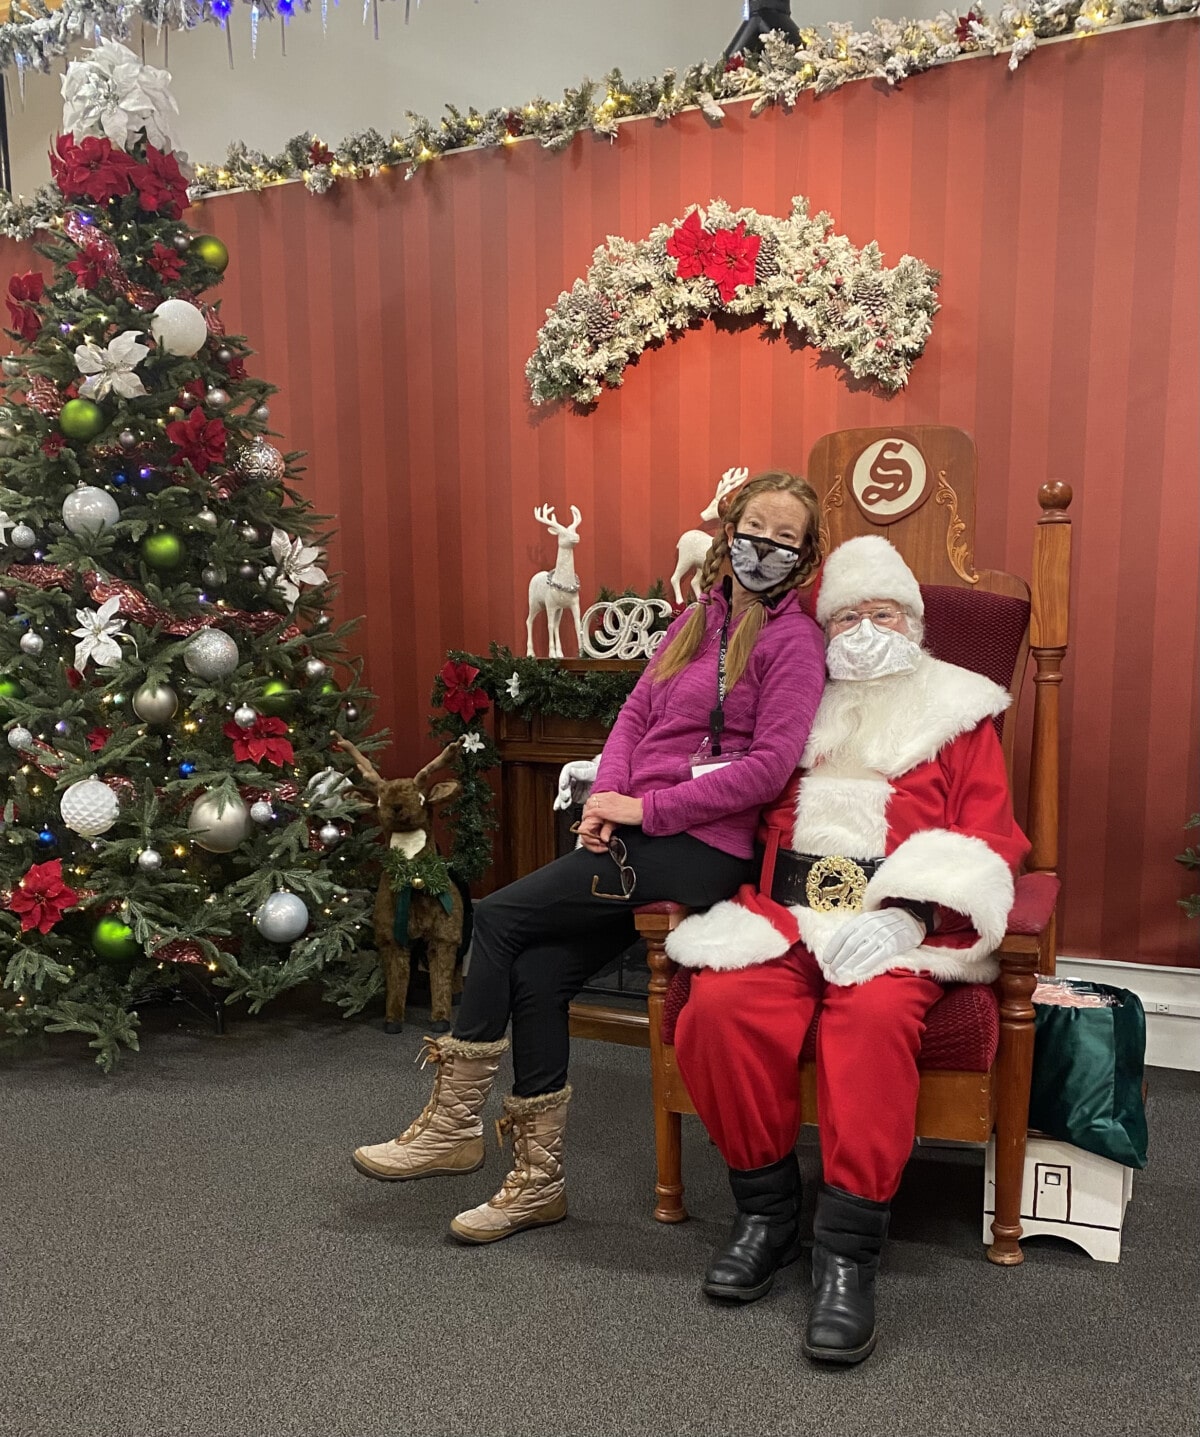 Visiting Santa during the winter in Fairbanks.